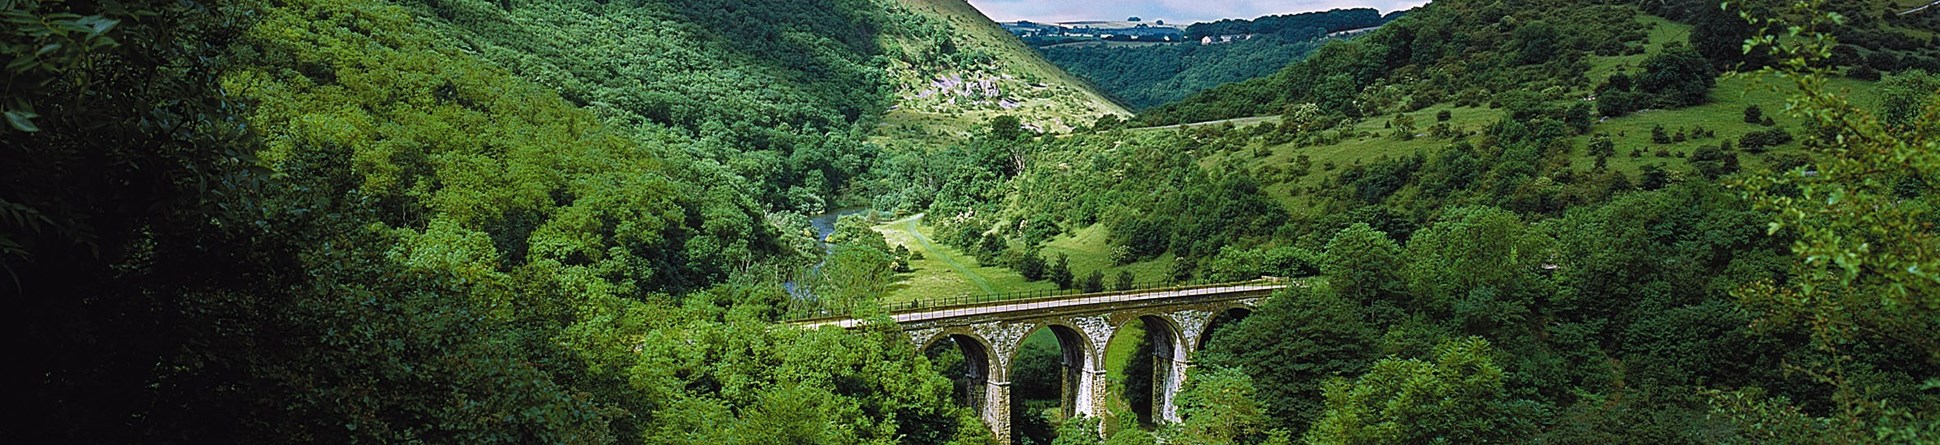 Monsal Dale Railway Viaduct, Derbyshire